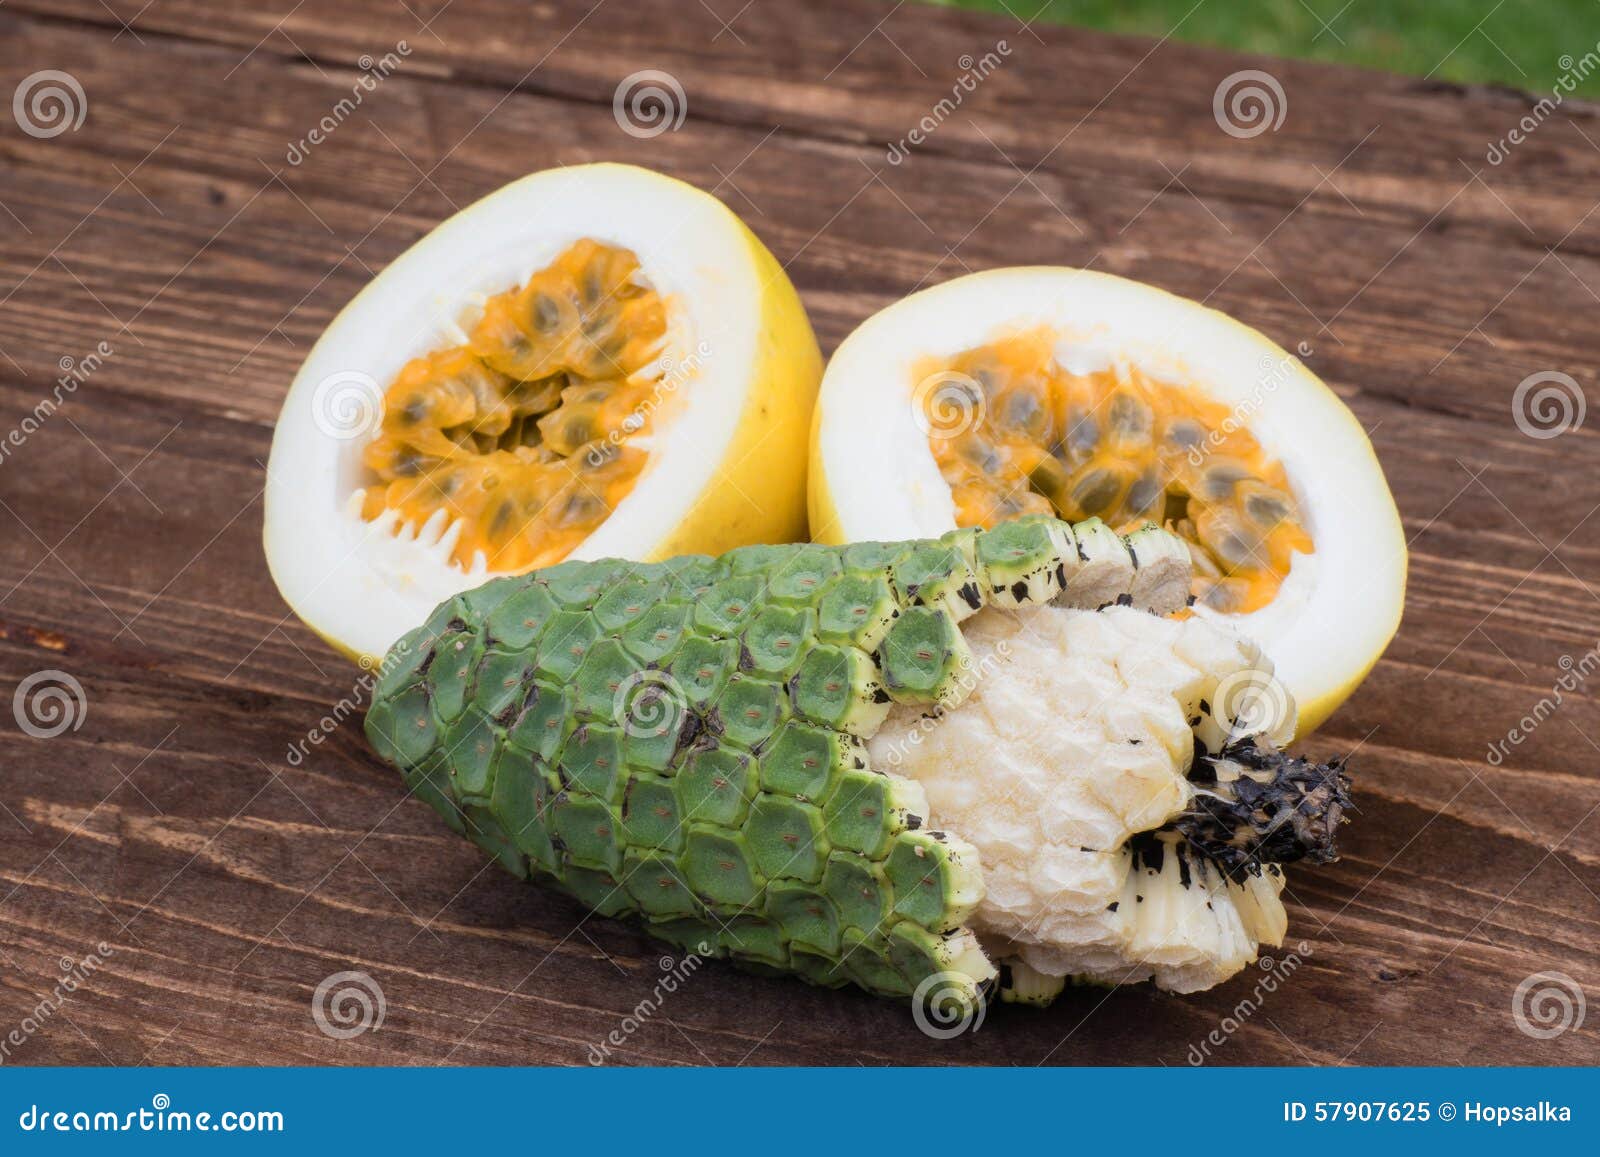 Exotic Fruits Ananas-banana And Maracuja Stock Photo ...